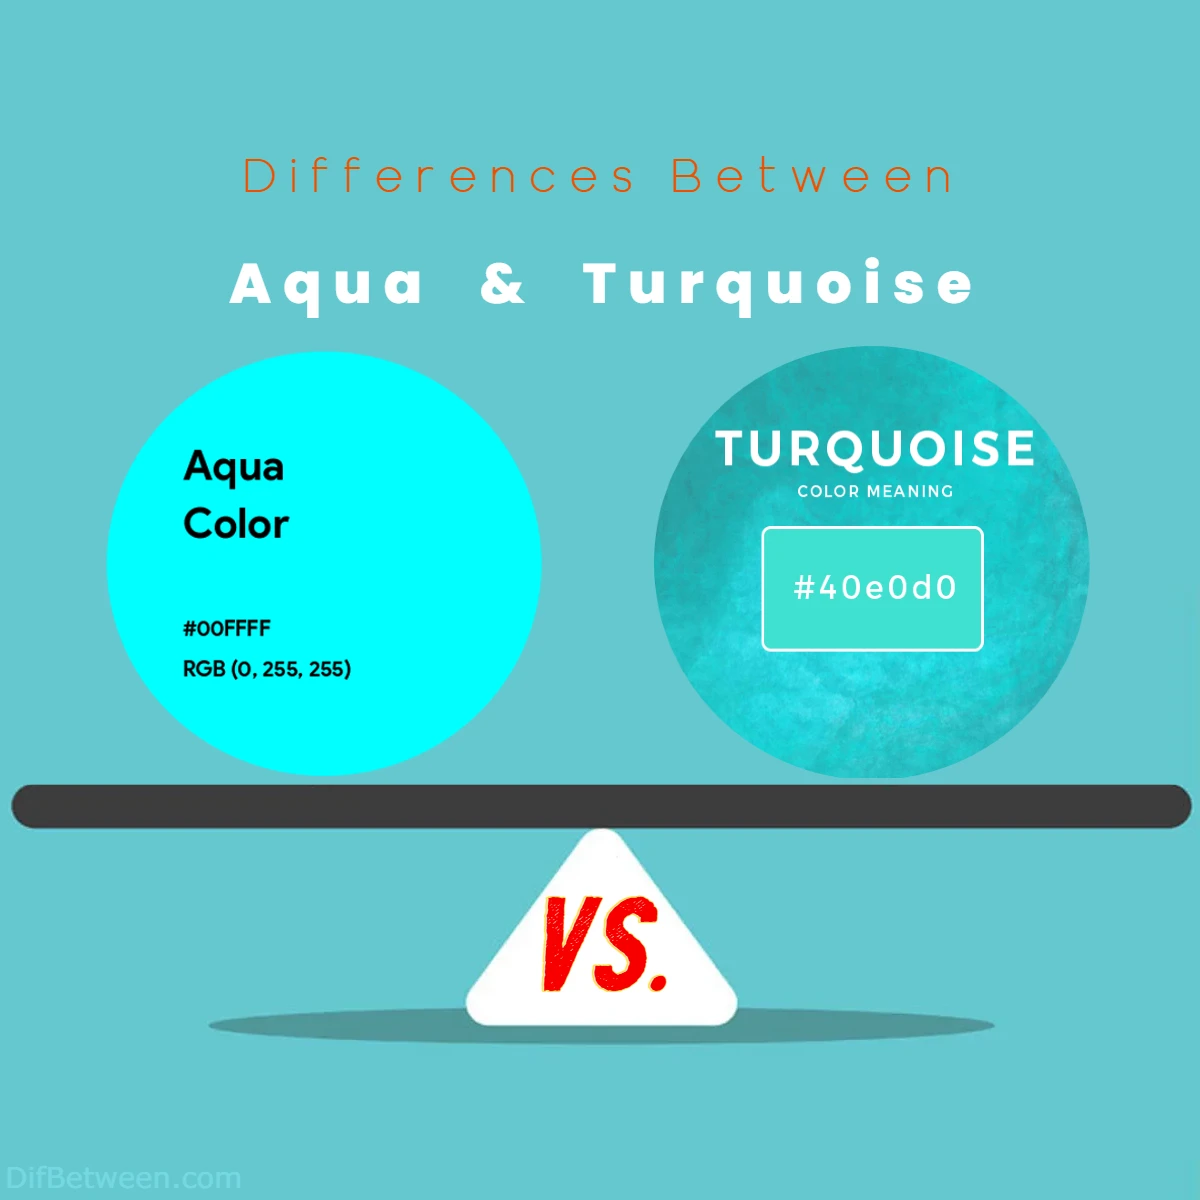 Differences Between Aqua vs Turquoise